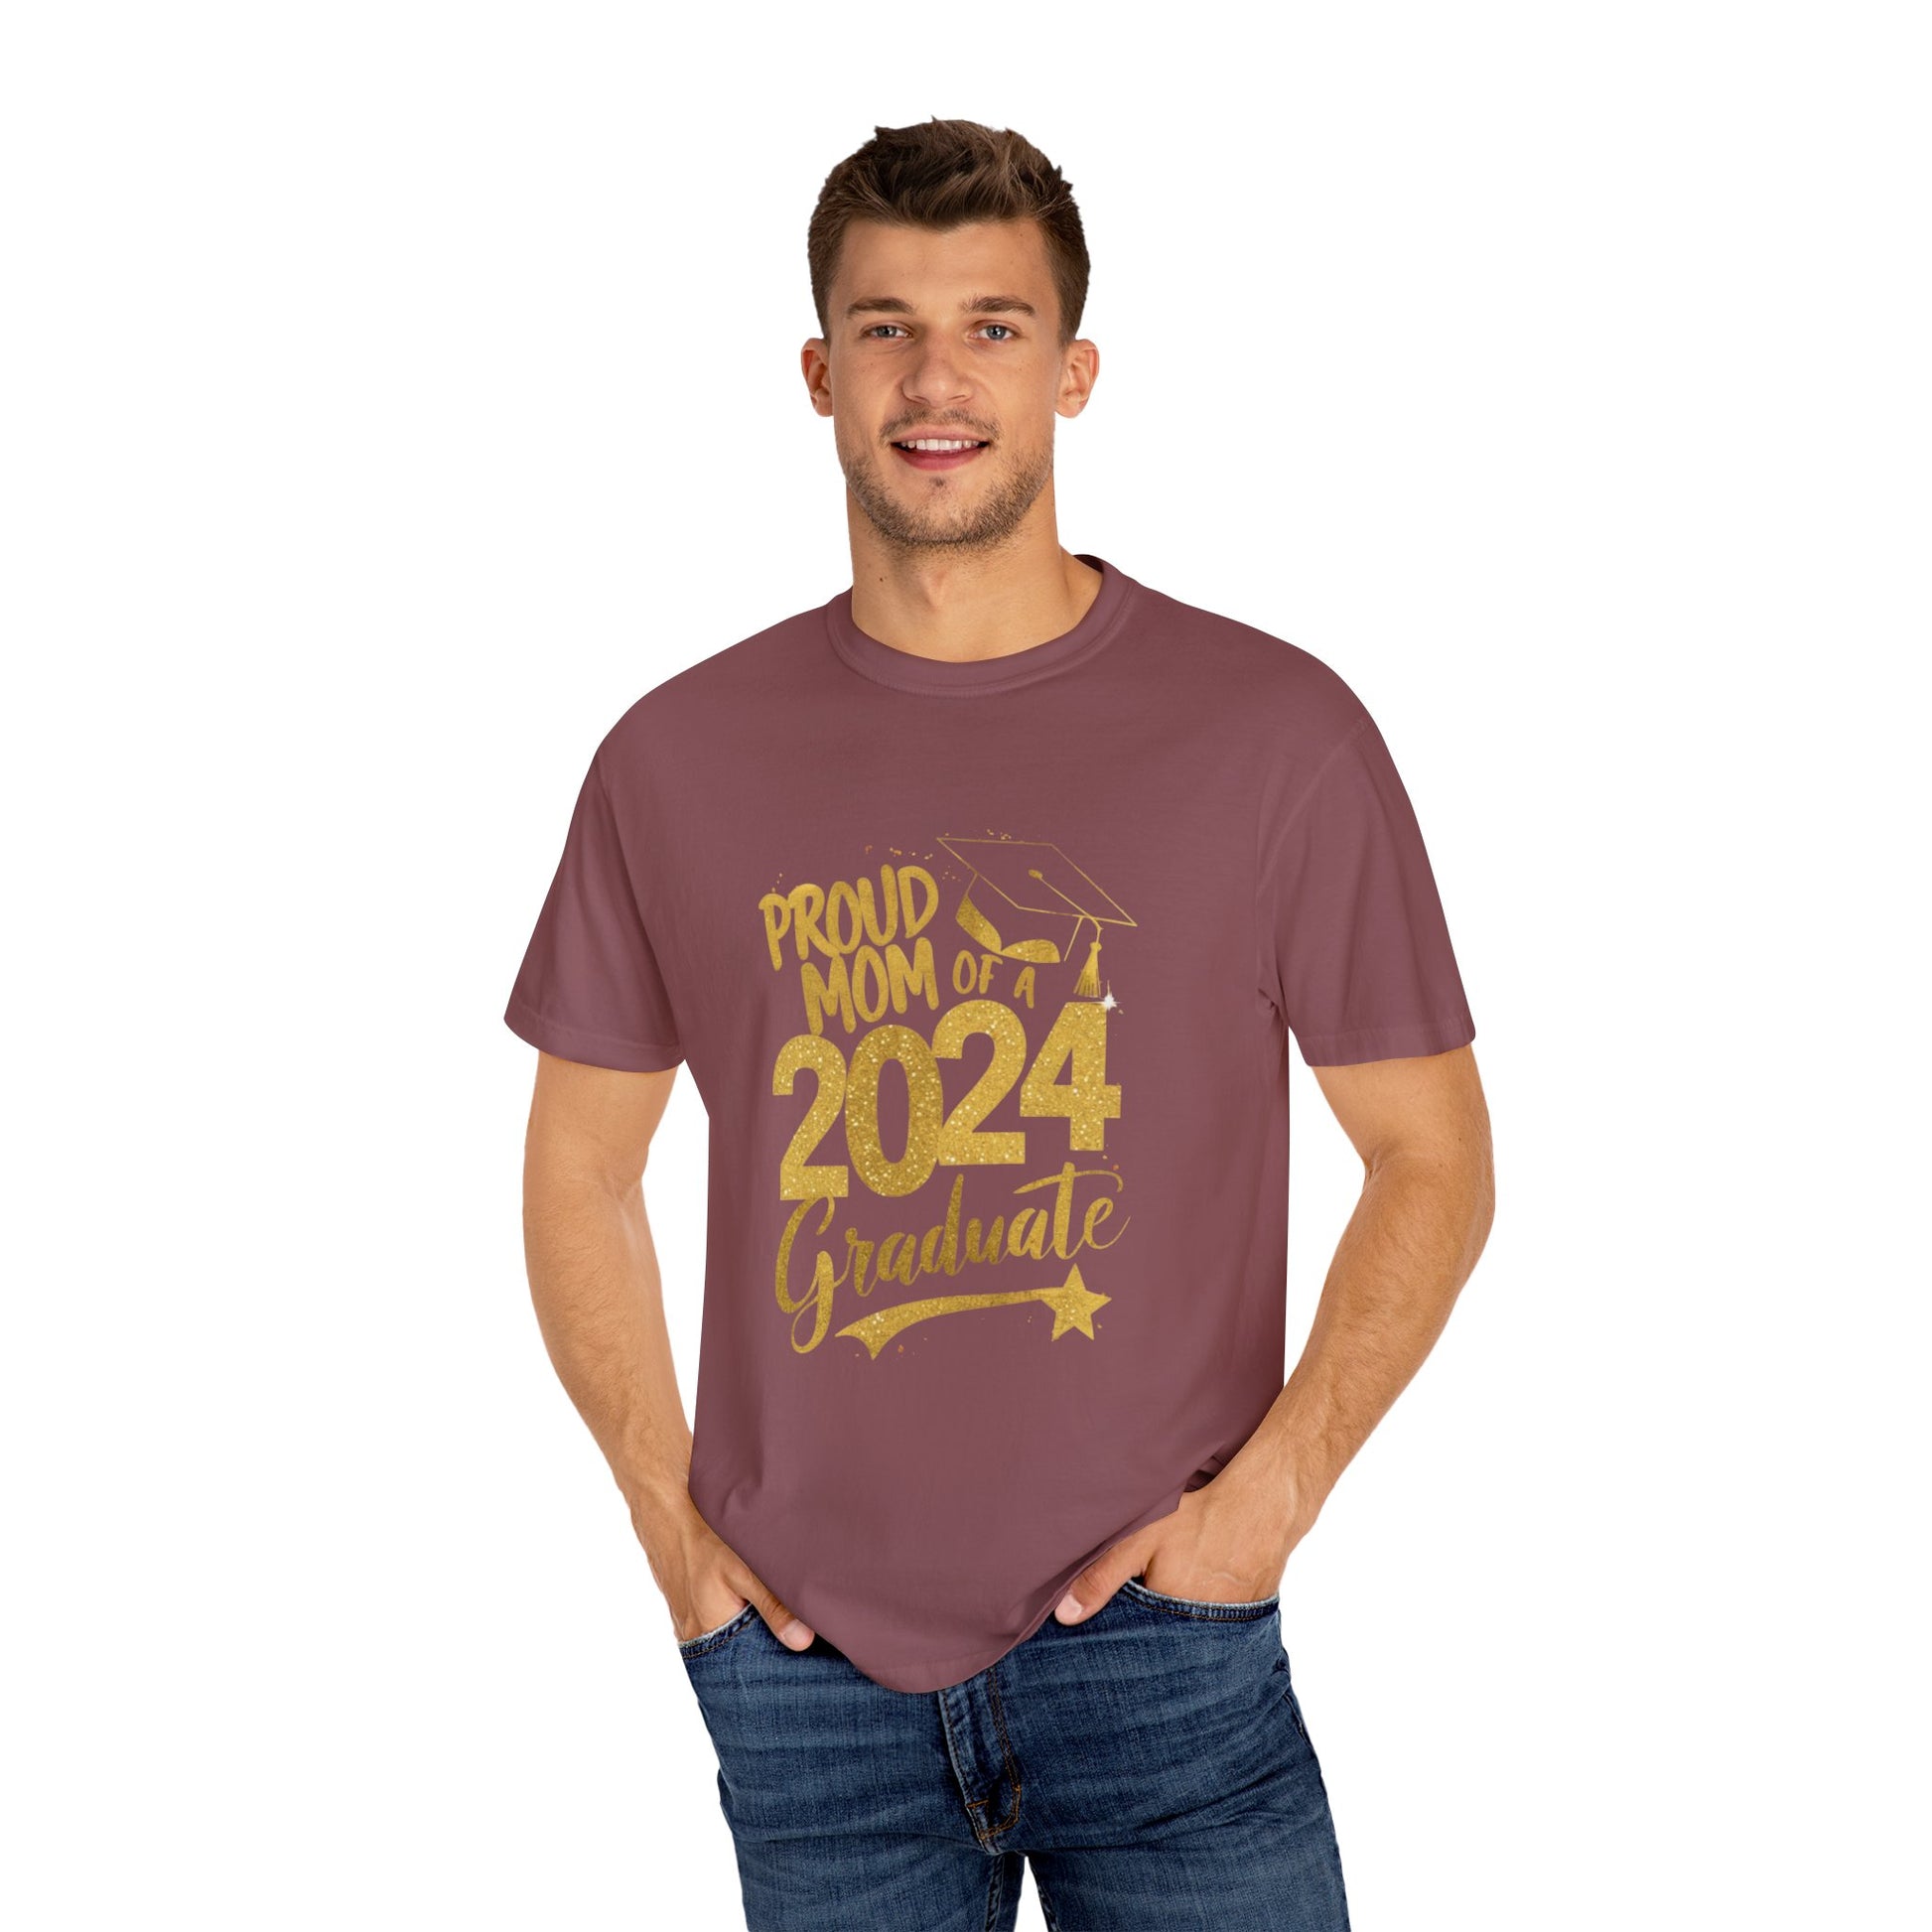 Proud of Mom 2024 Graduate Unisex Garment-dyed T-shirt Cotton Funny Humorous Graphic Soft Premium Unisex Men Women Brick T-shirt Birthday Gift-30